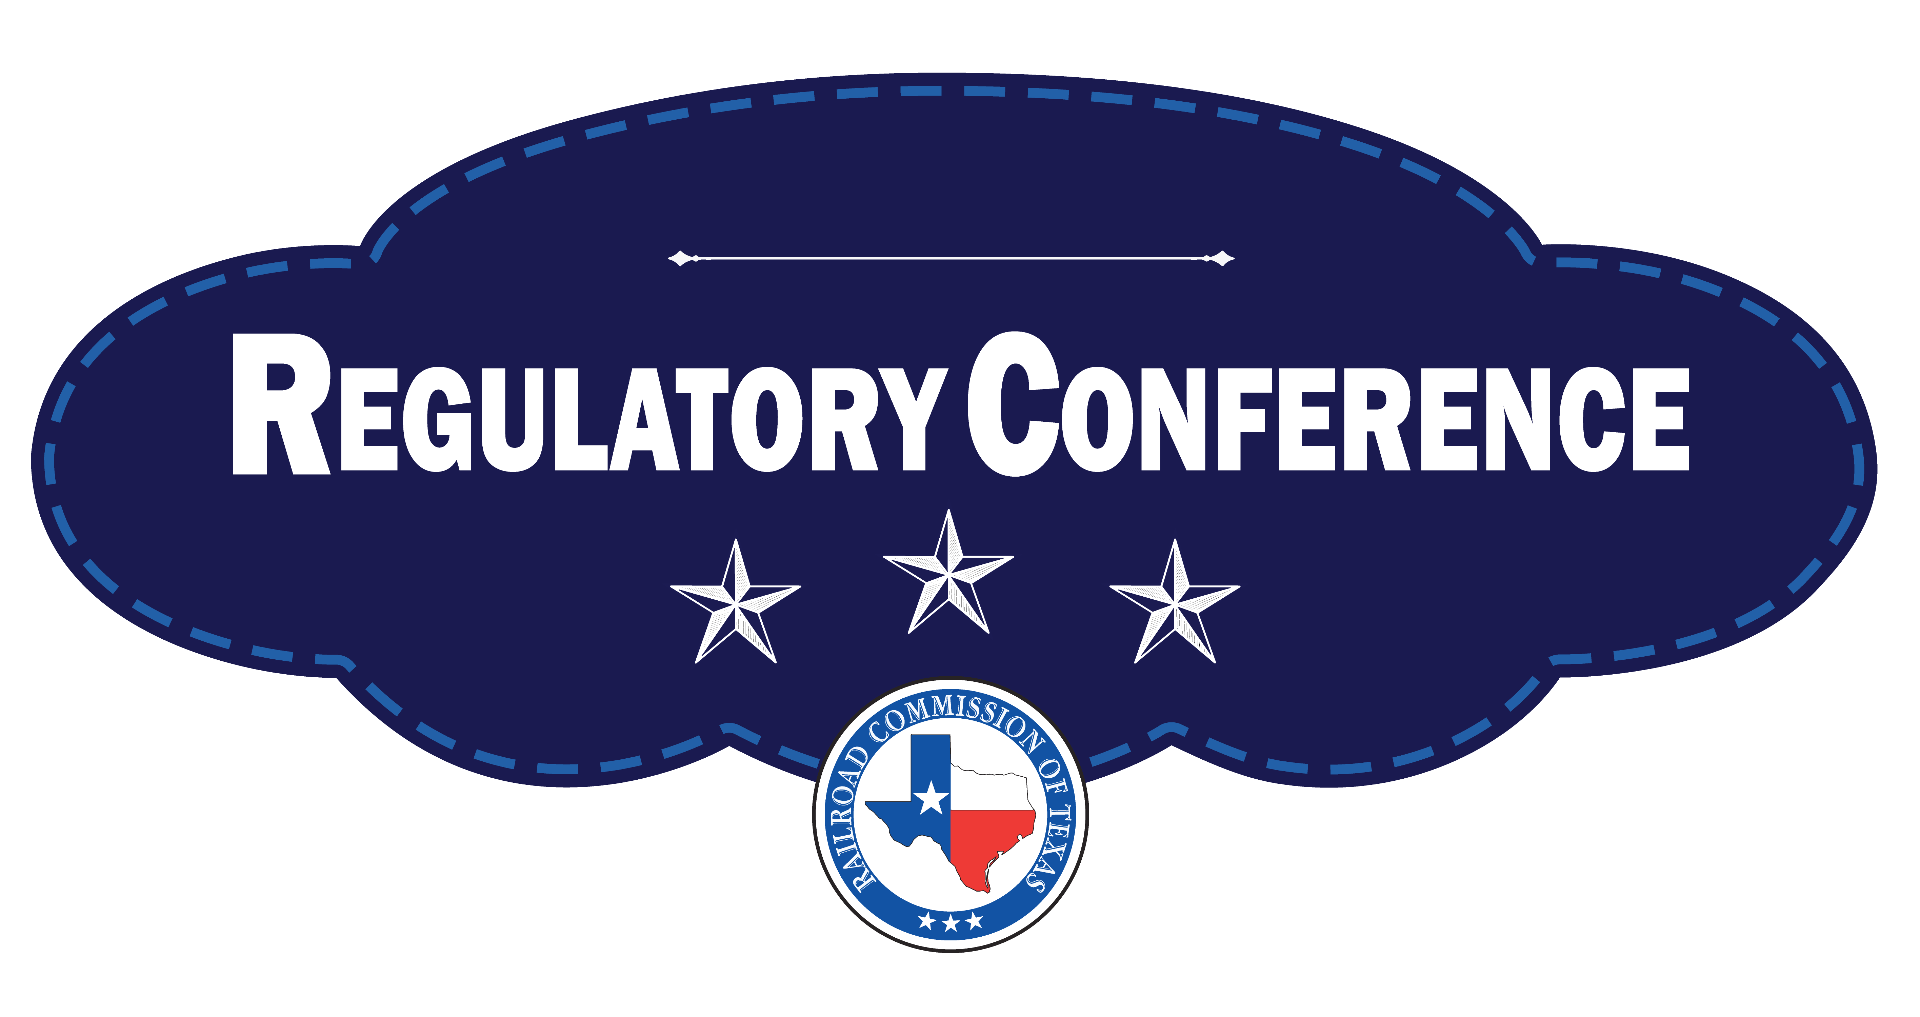 Regulatory Conference logo